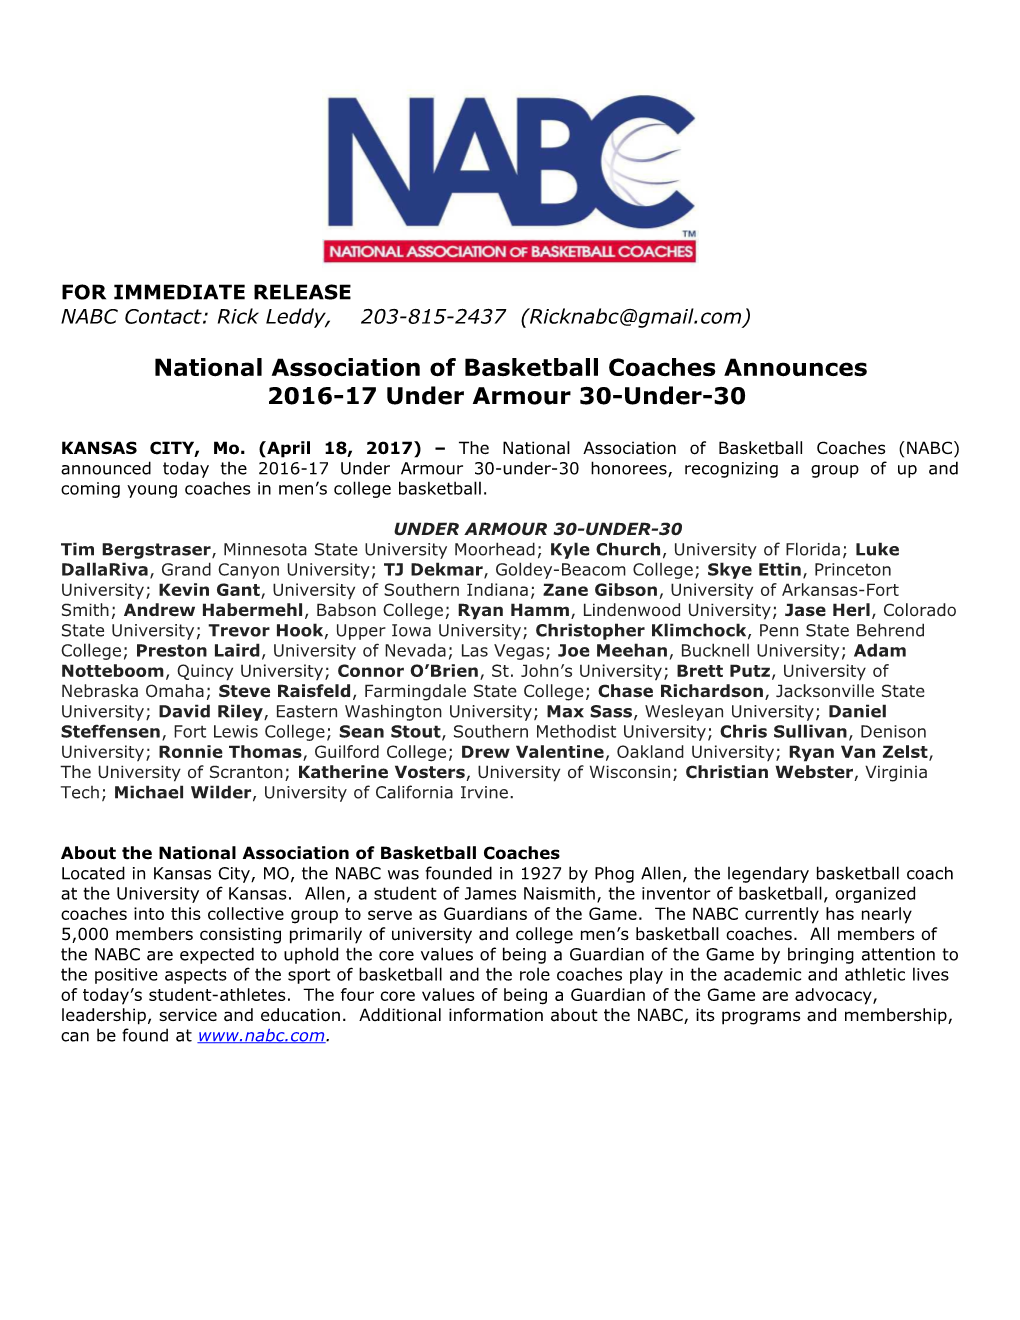 National Association of Basketball Coaches Announces